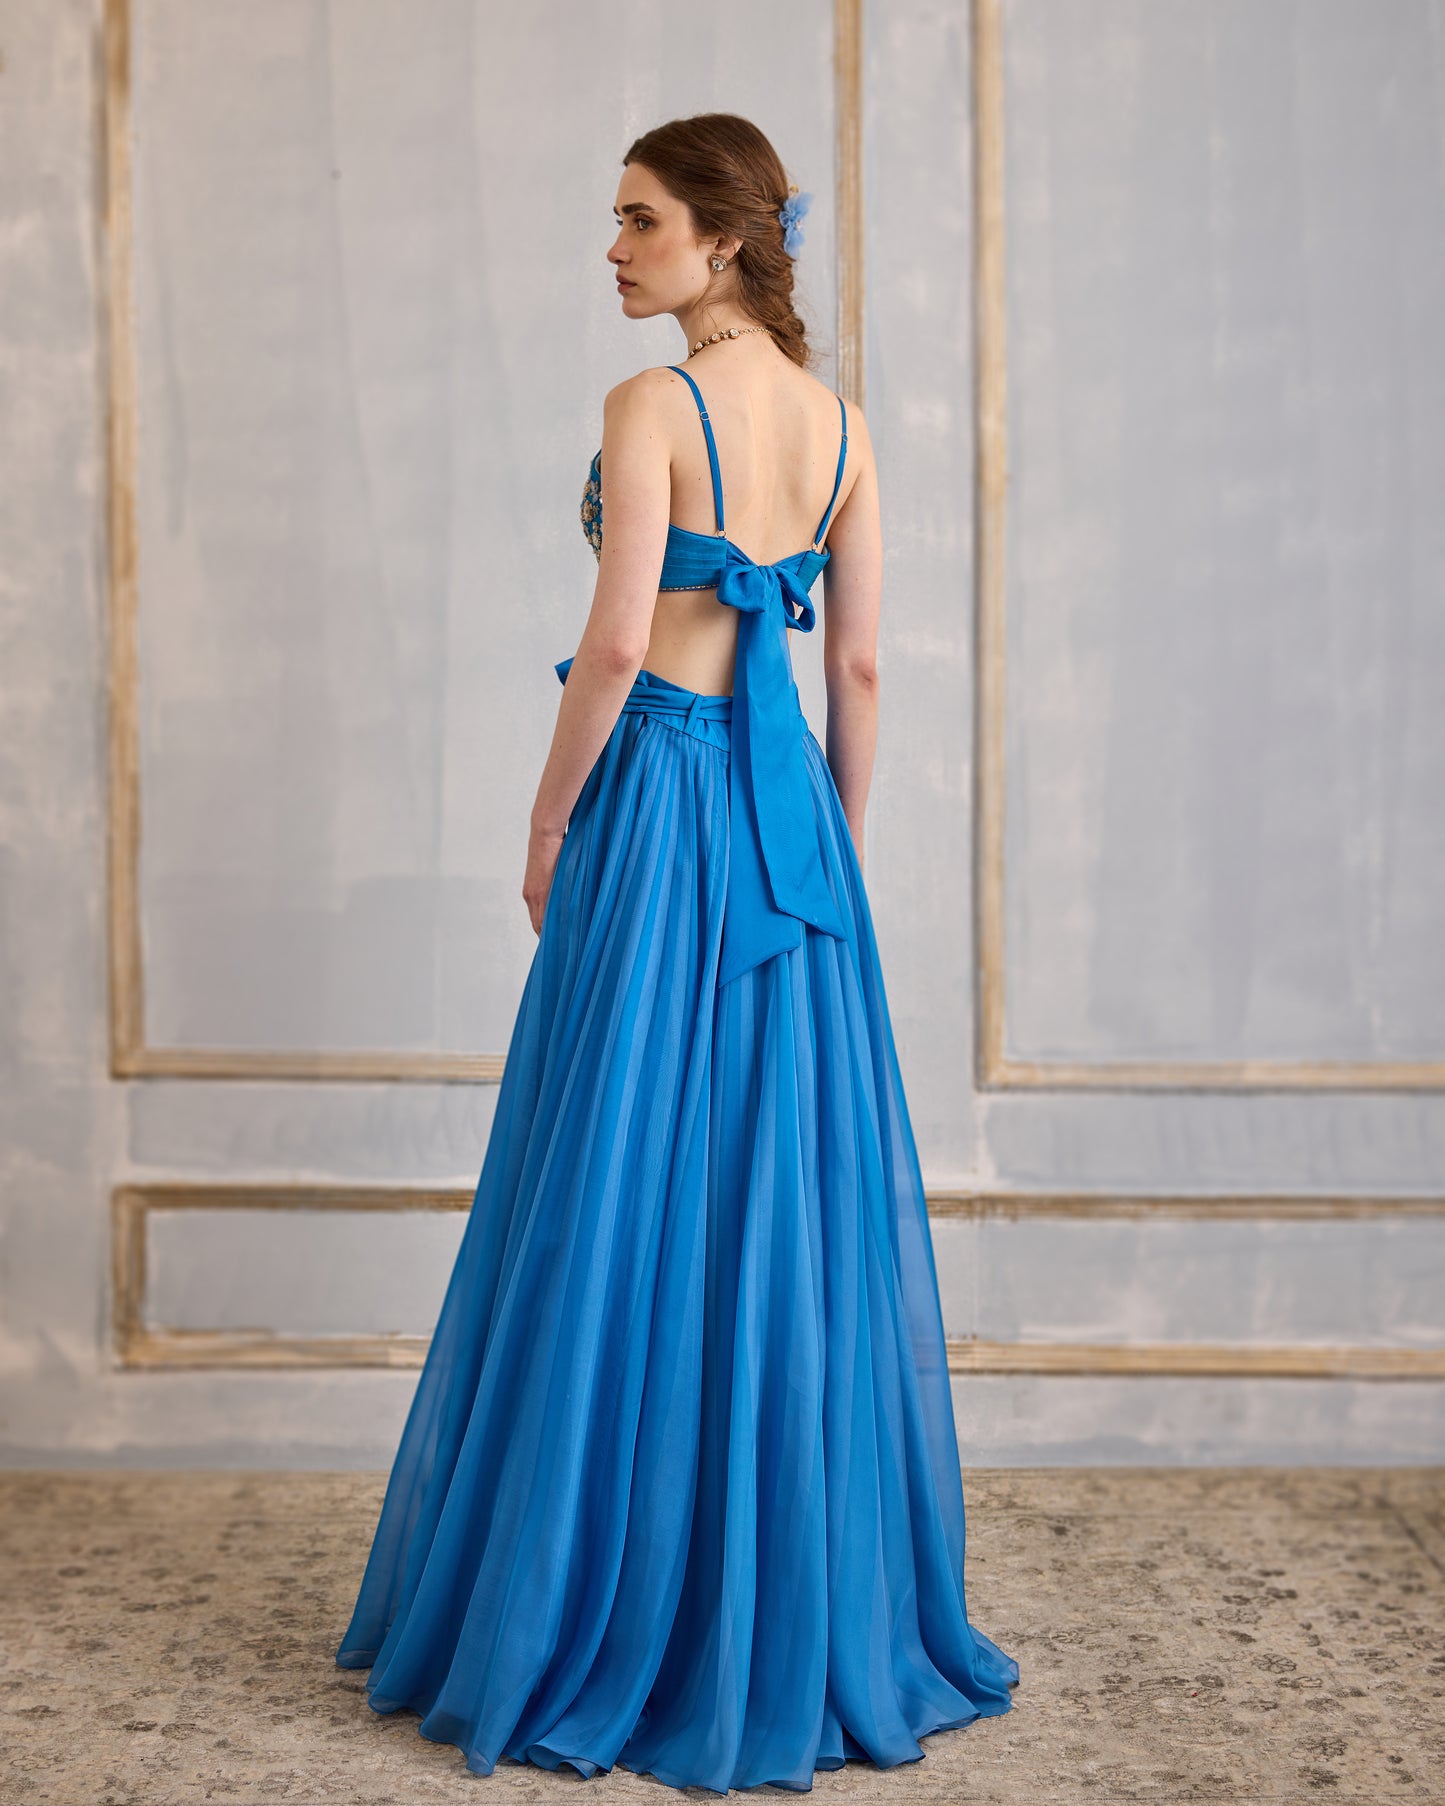 Dazzling blue skirt set